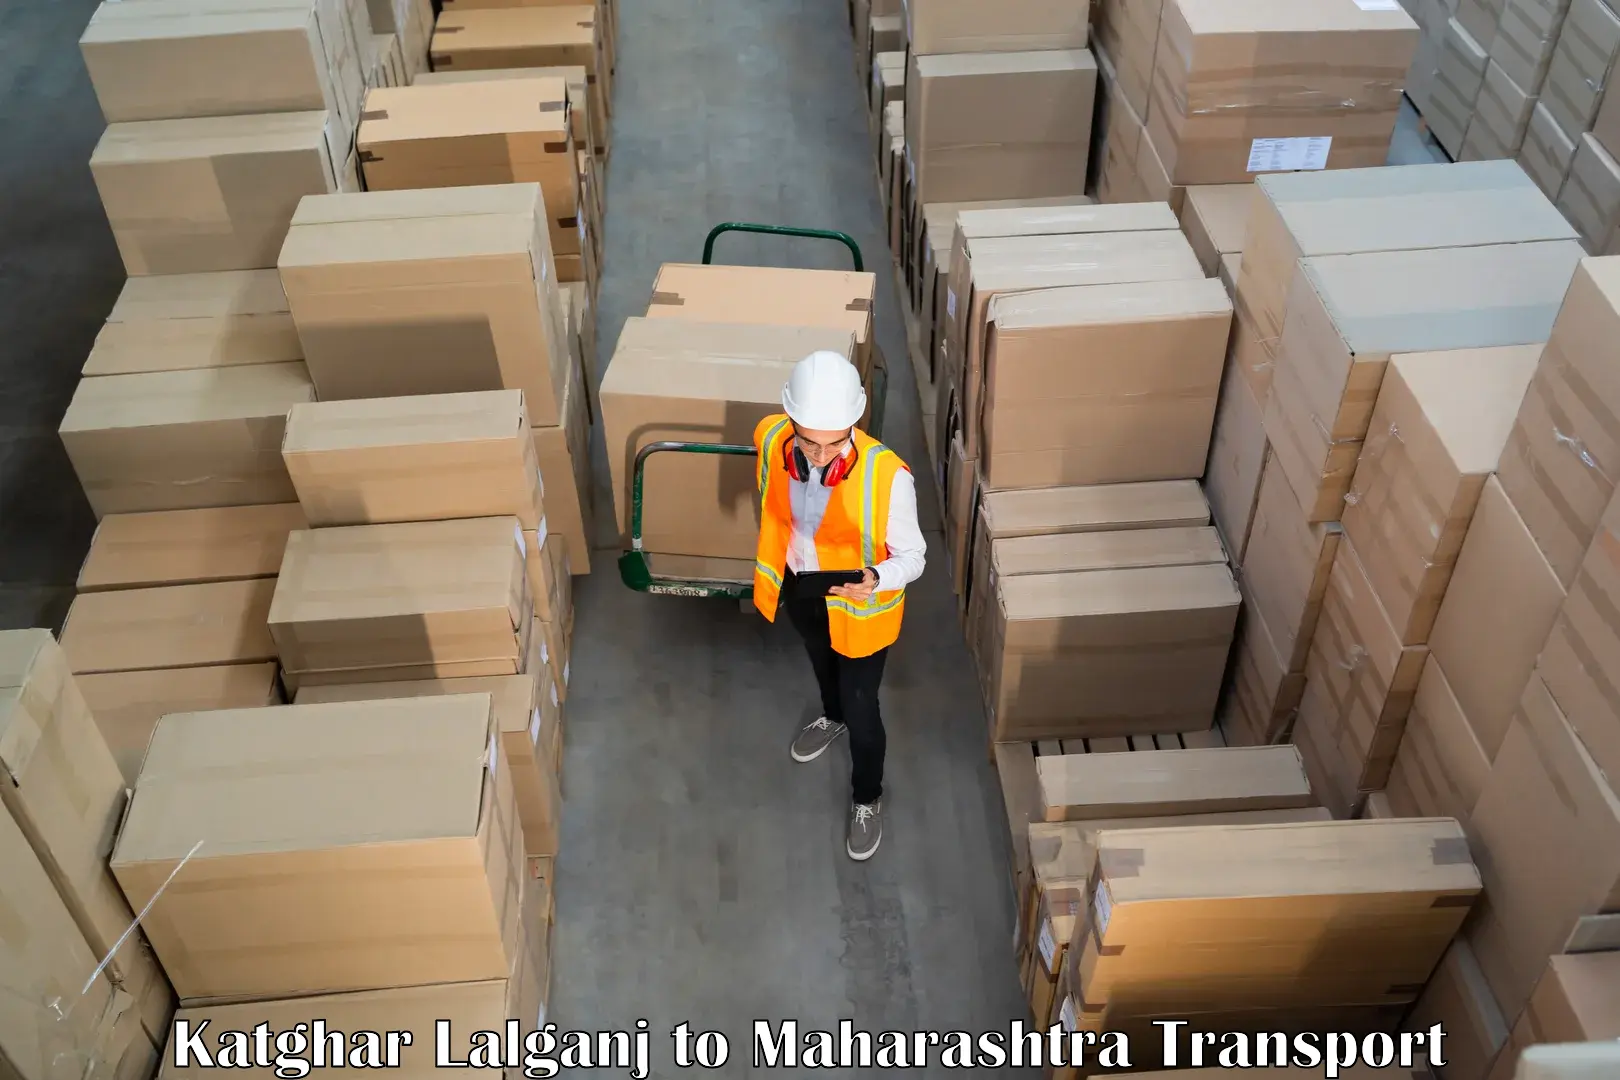 Truck transport companies in India Katghar Lalganj to Maharashtra